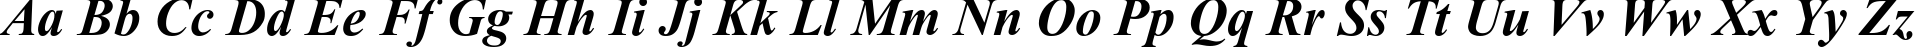 Пример написания английского алфавита шрифтом Aparajita Bold Italic